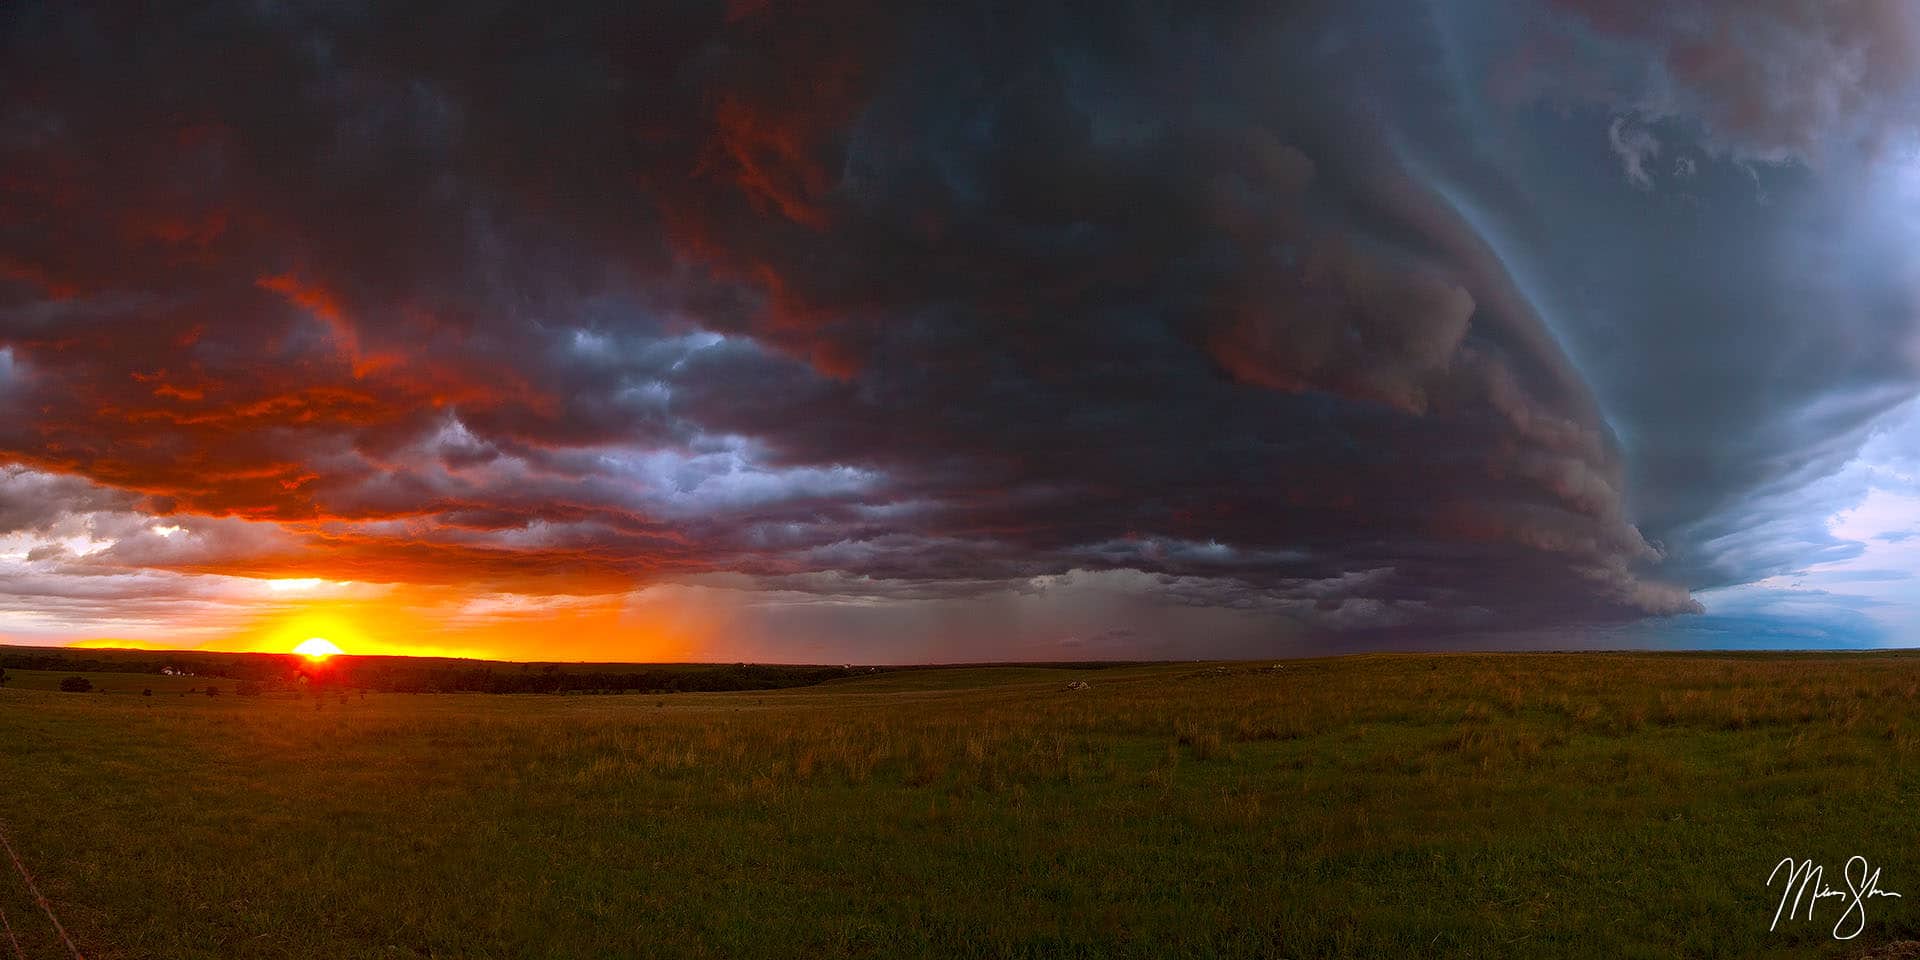 North Central Kansas: Kansas thunderstorms and sunset